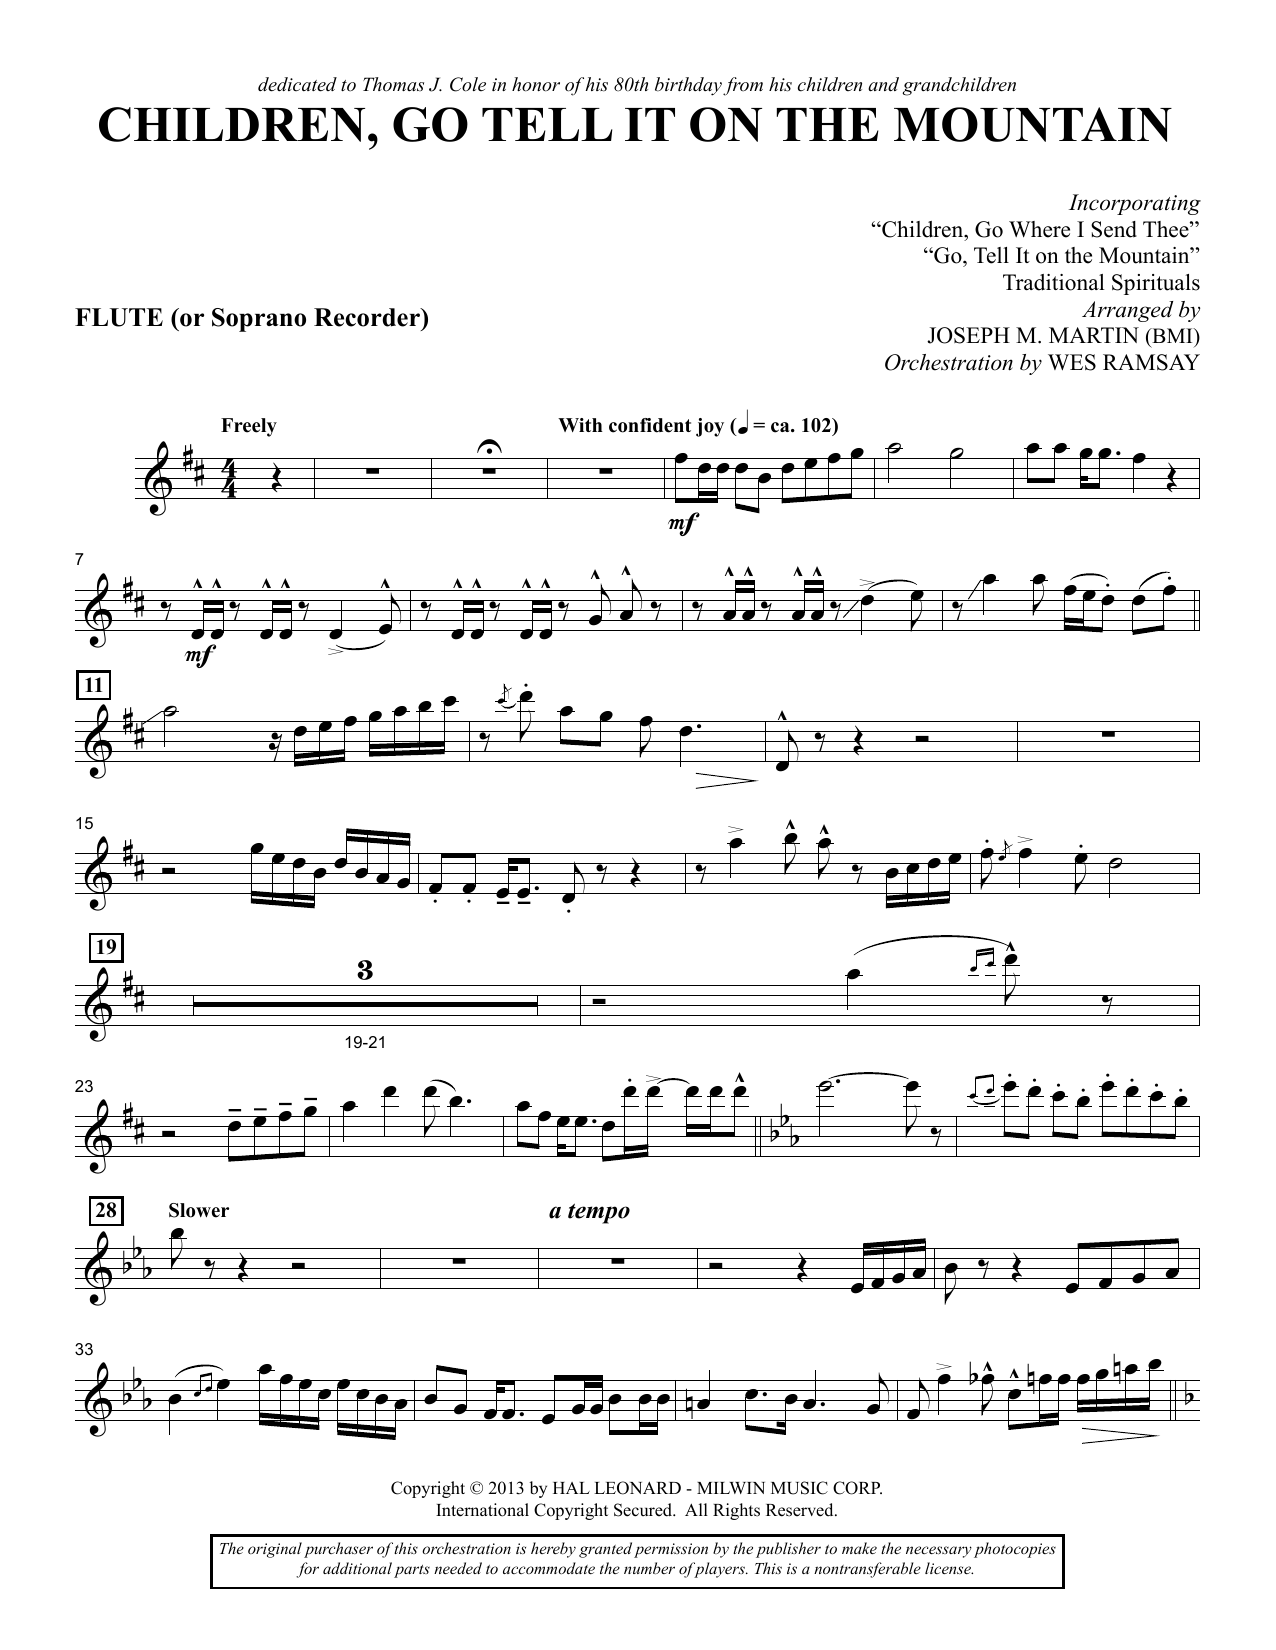 Joseph M. Martin Children, Go Tell It on the Mountain - Flute/Soprano Recorder Sheet Music Notes & Chords for Choir Instrumental Pak - Download or Print PDF